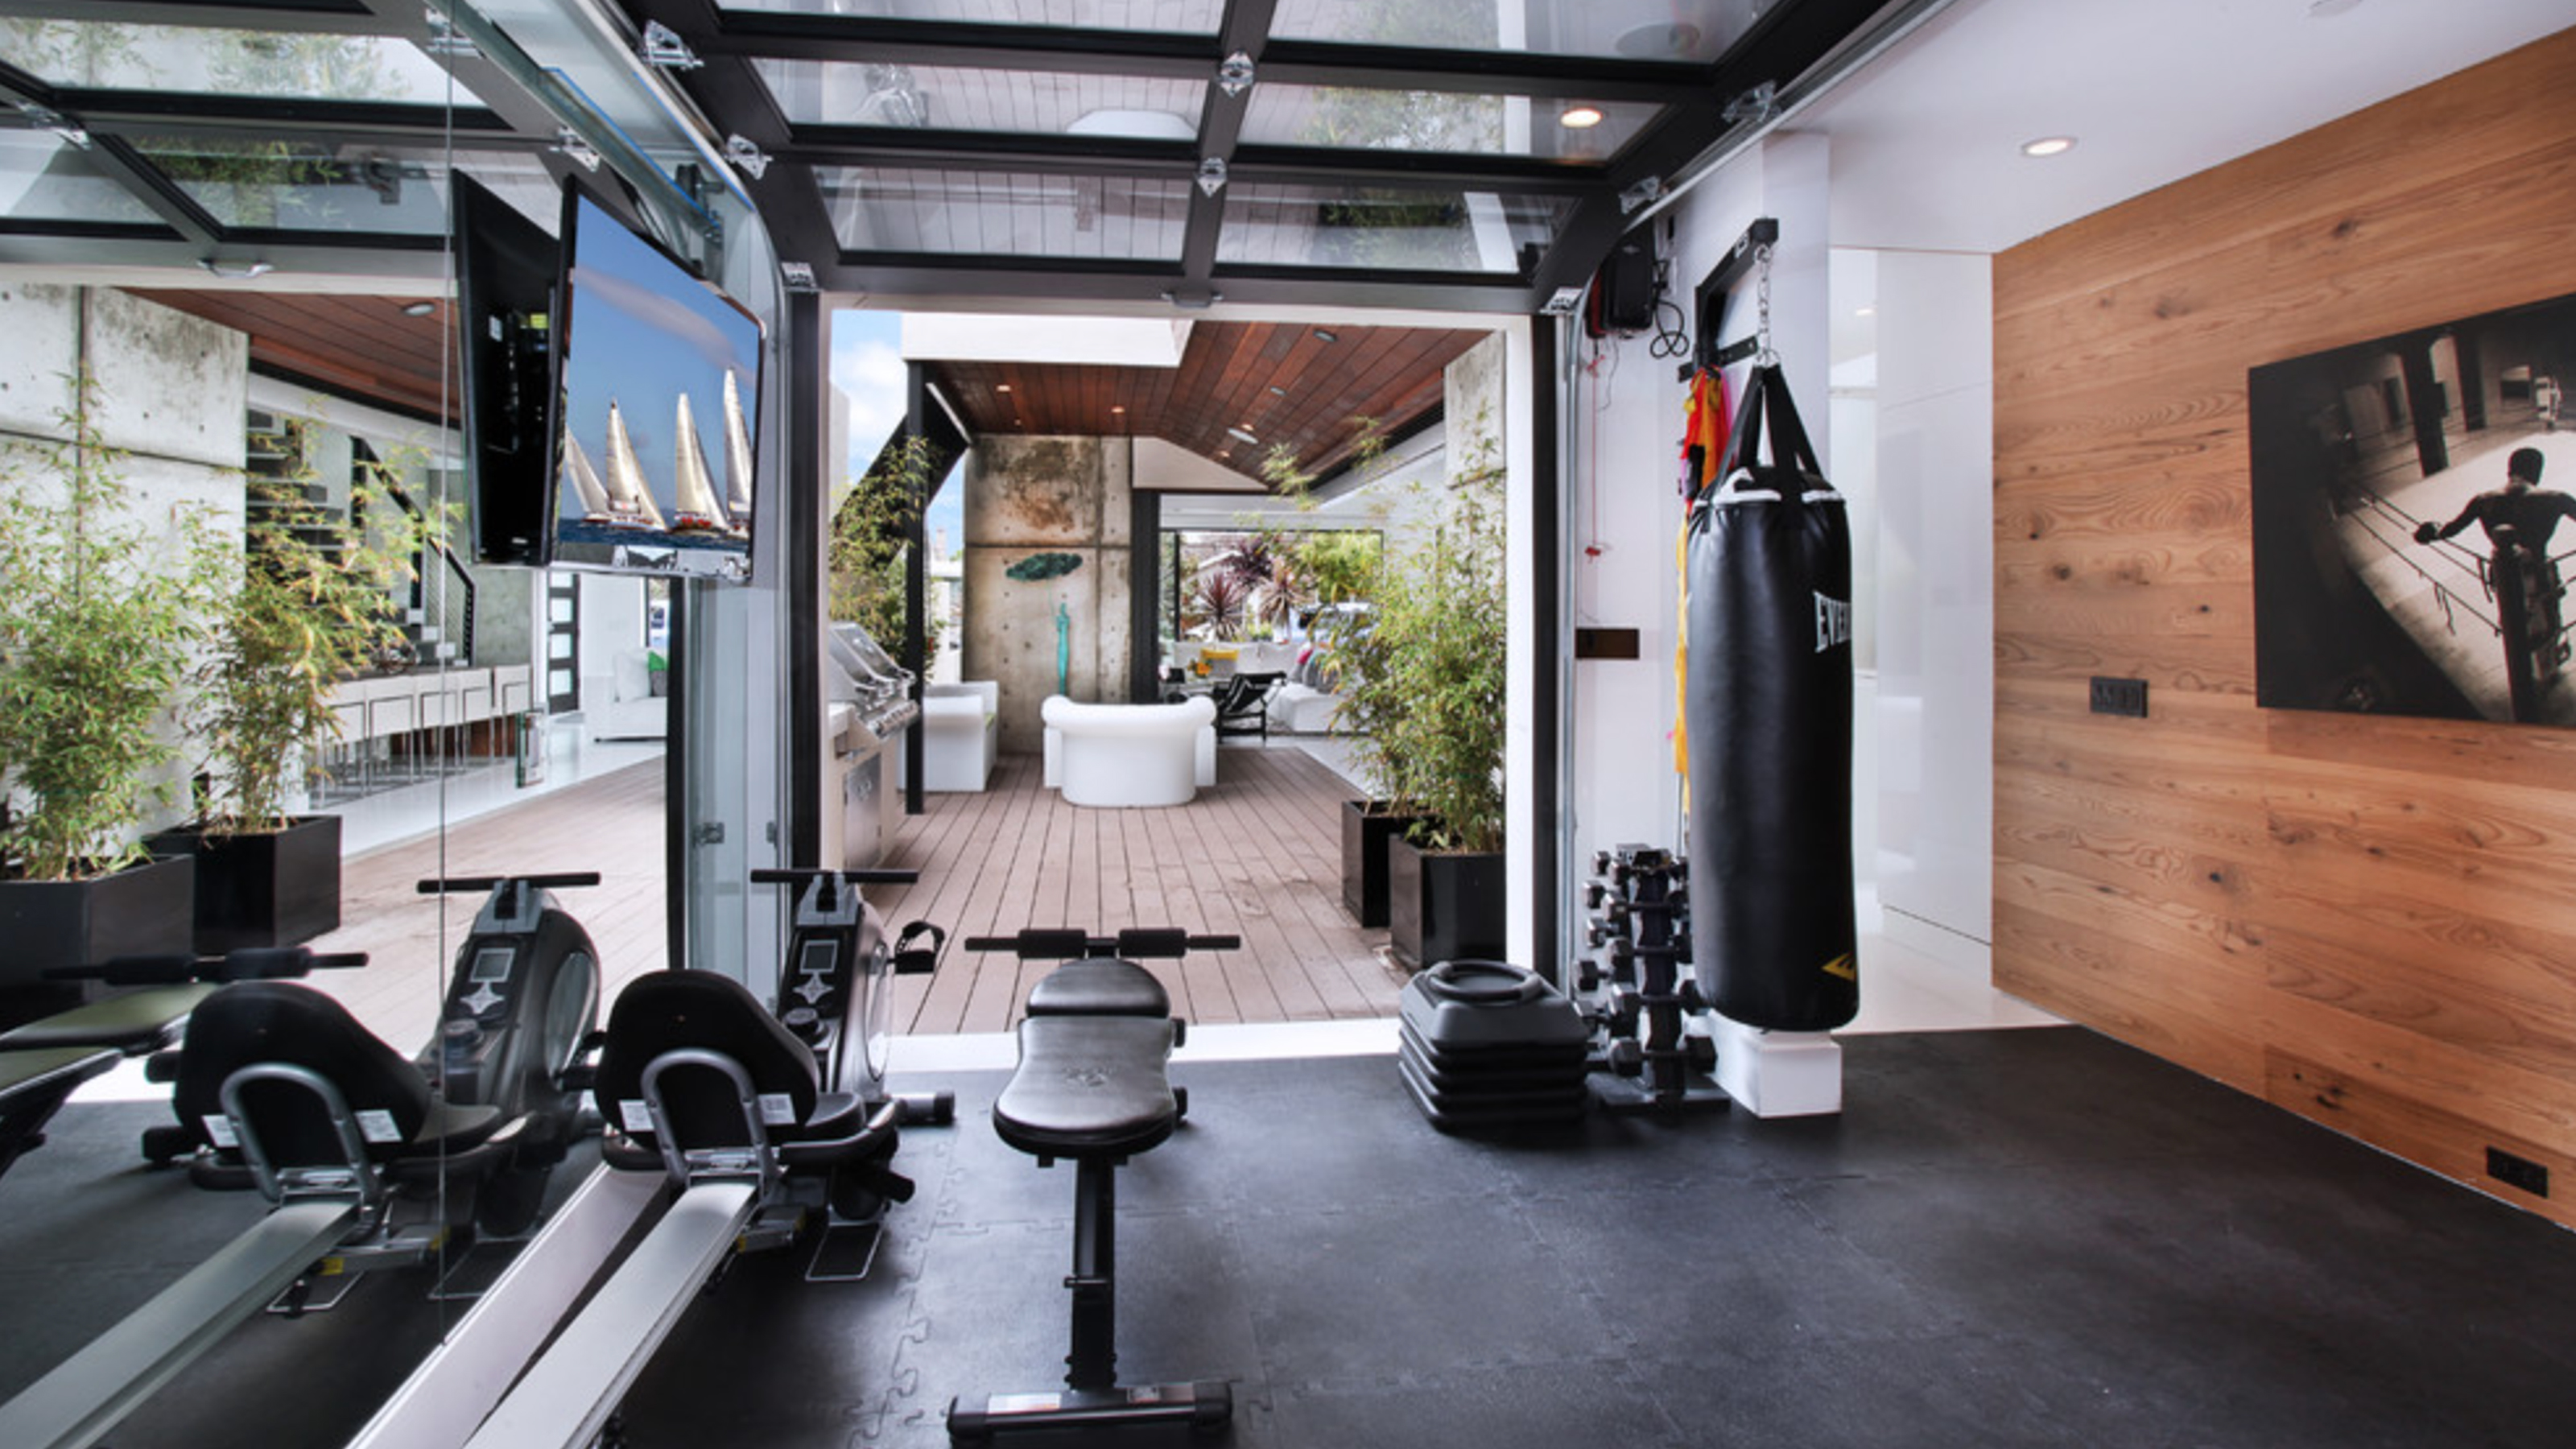 20 garage gym ideas – create the perfect home gym in a garage ...